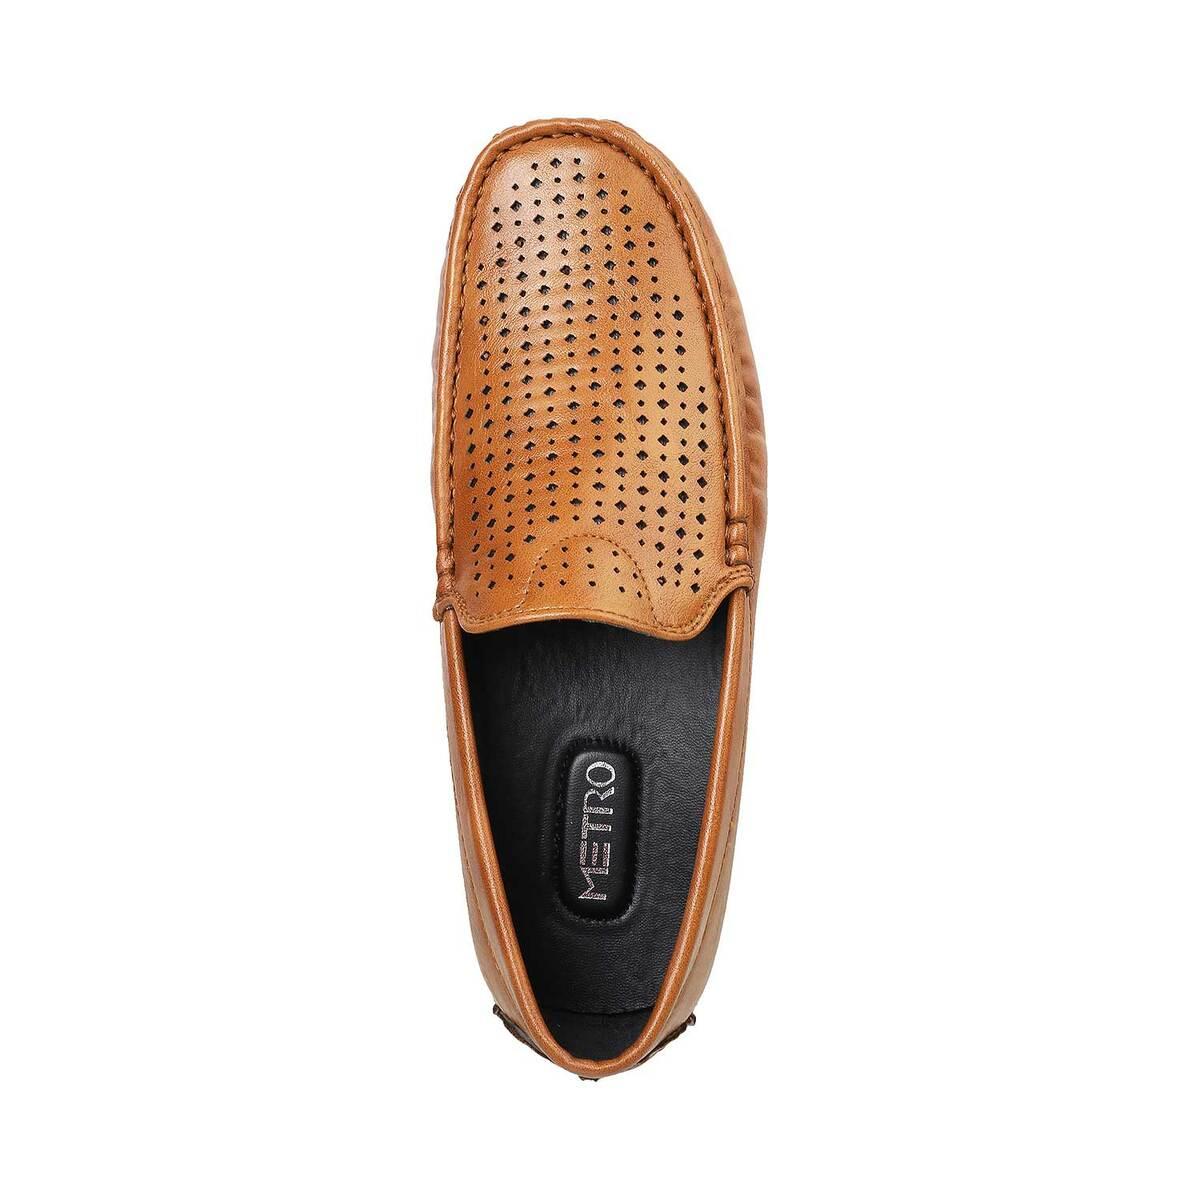 Buy Boys Tan Casual Loafers Online | SKU: 46-5540-23-33-Metro Shoes